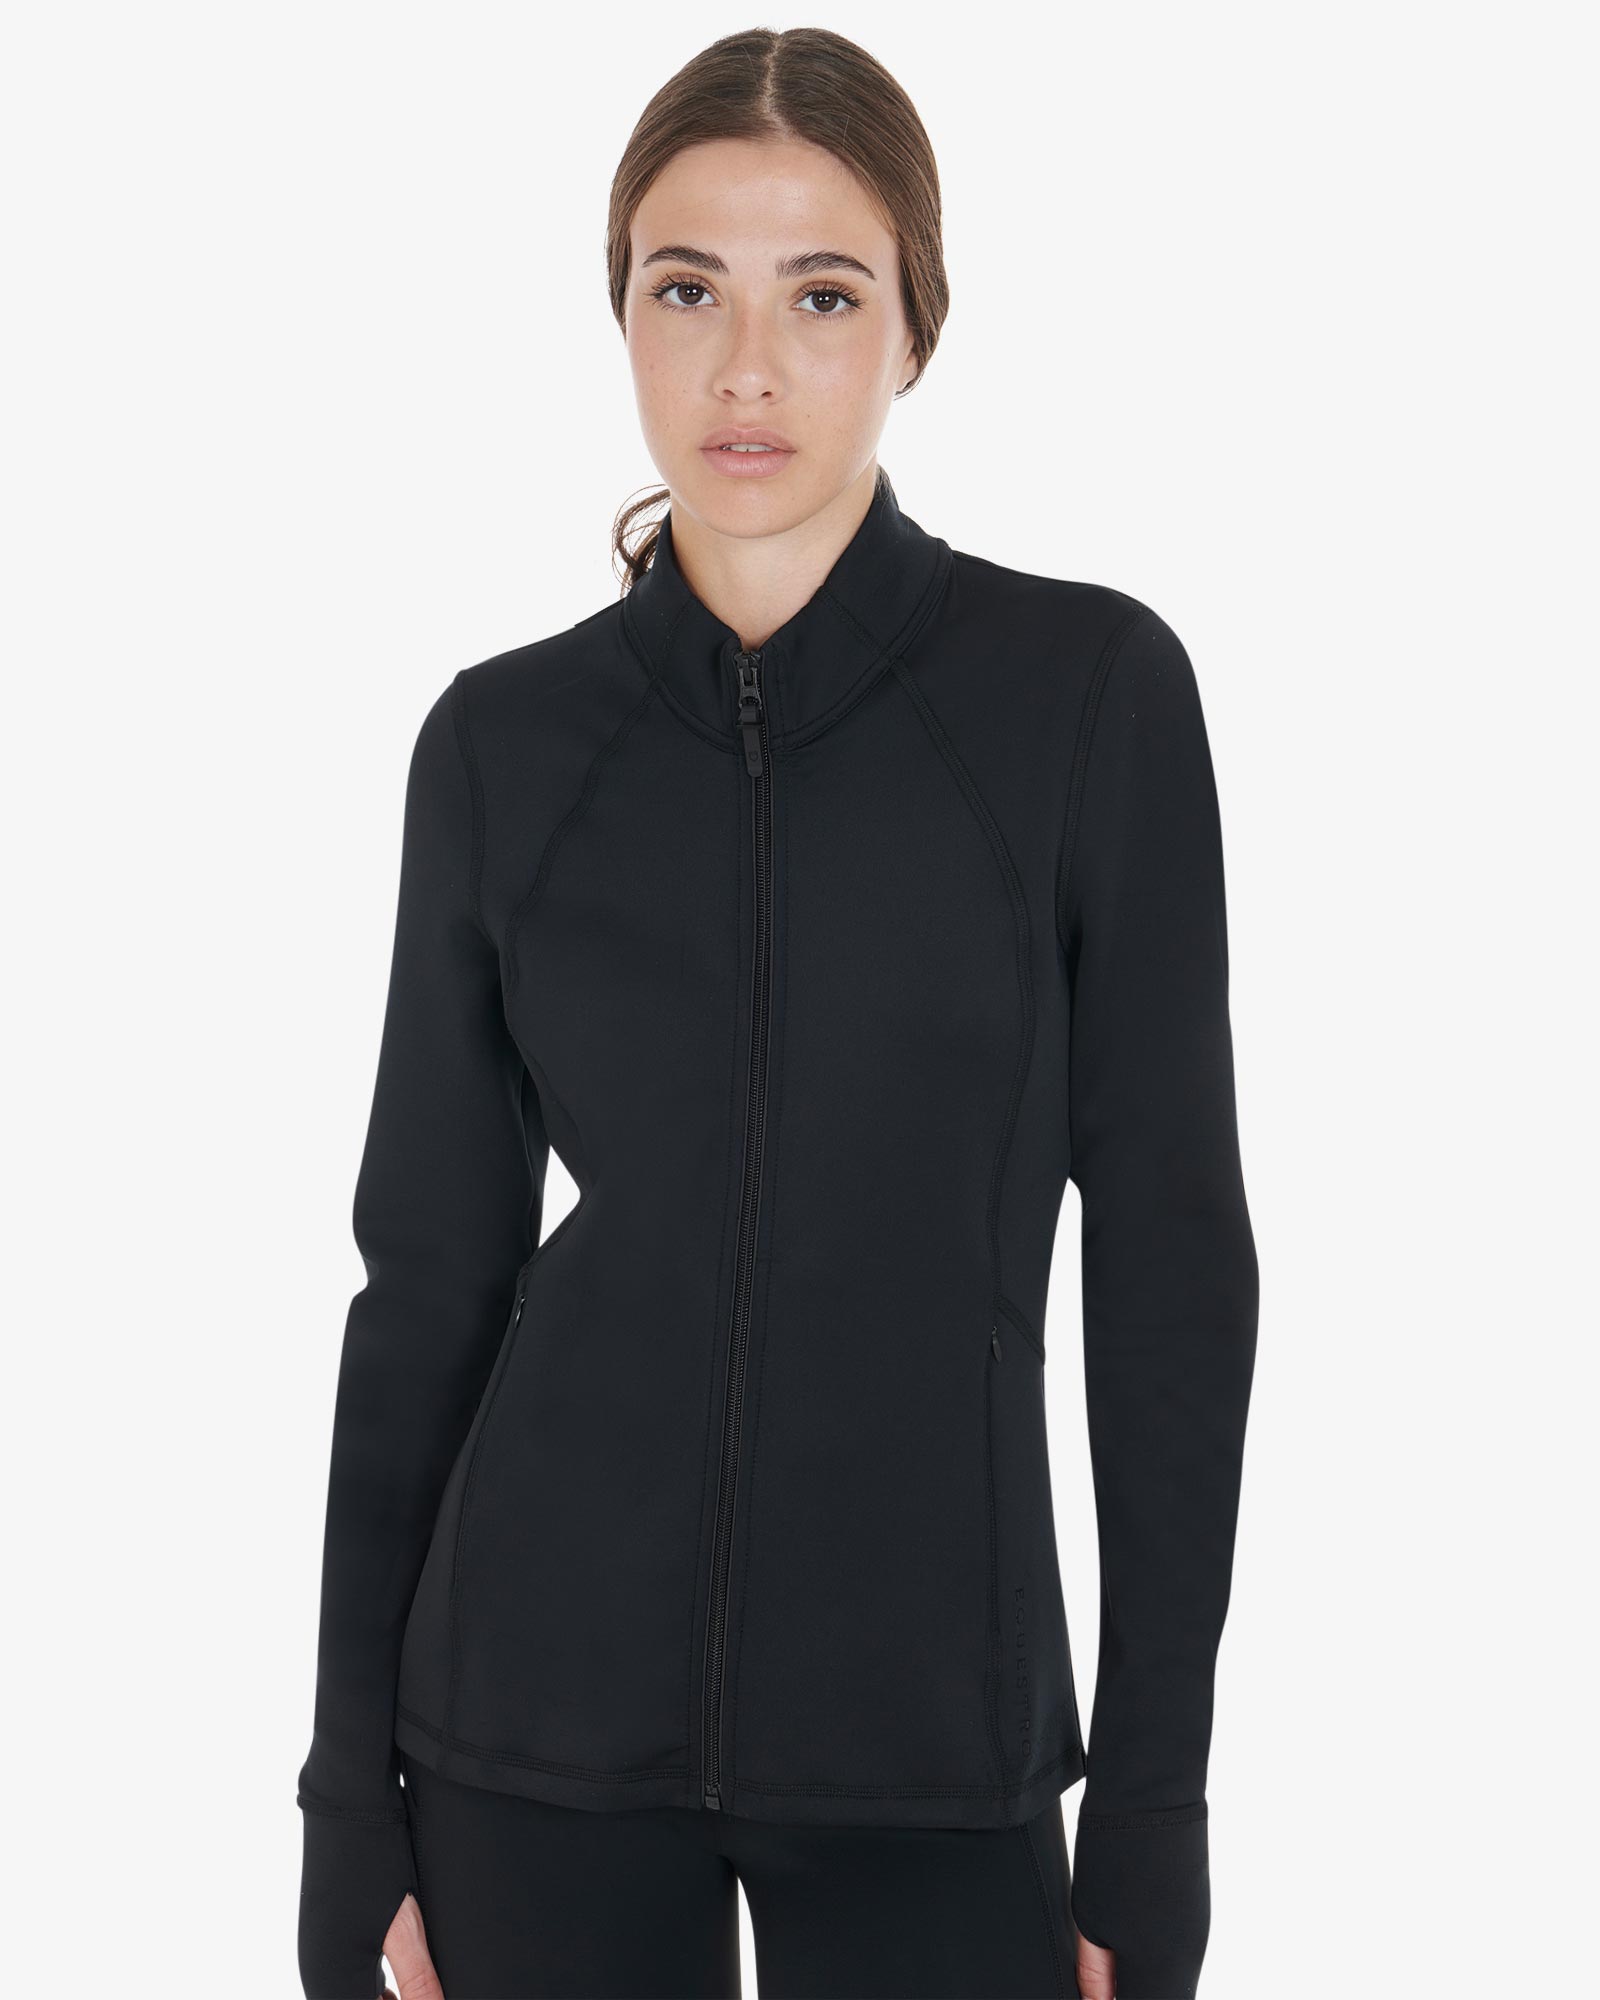 Women's sweatshirt breathable fabric, Shop